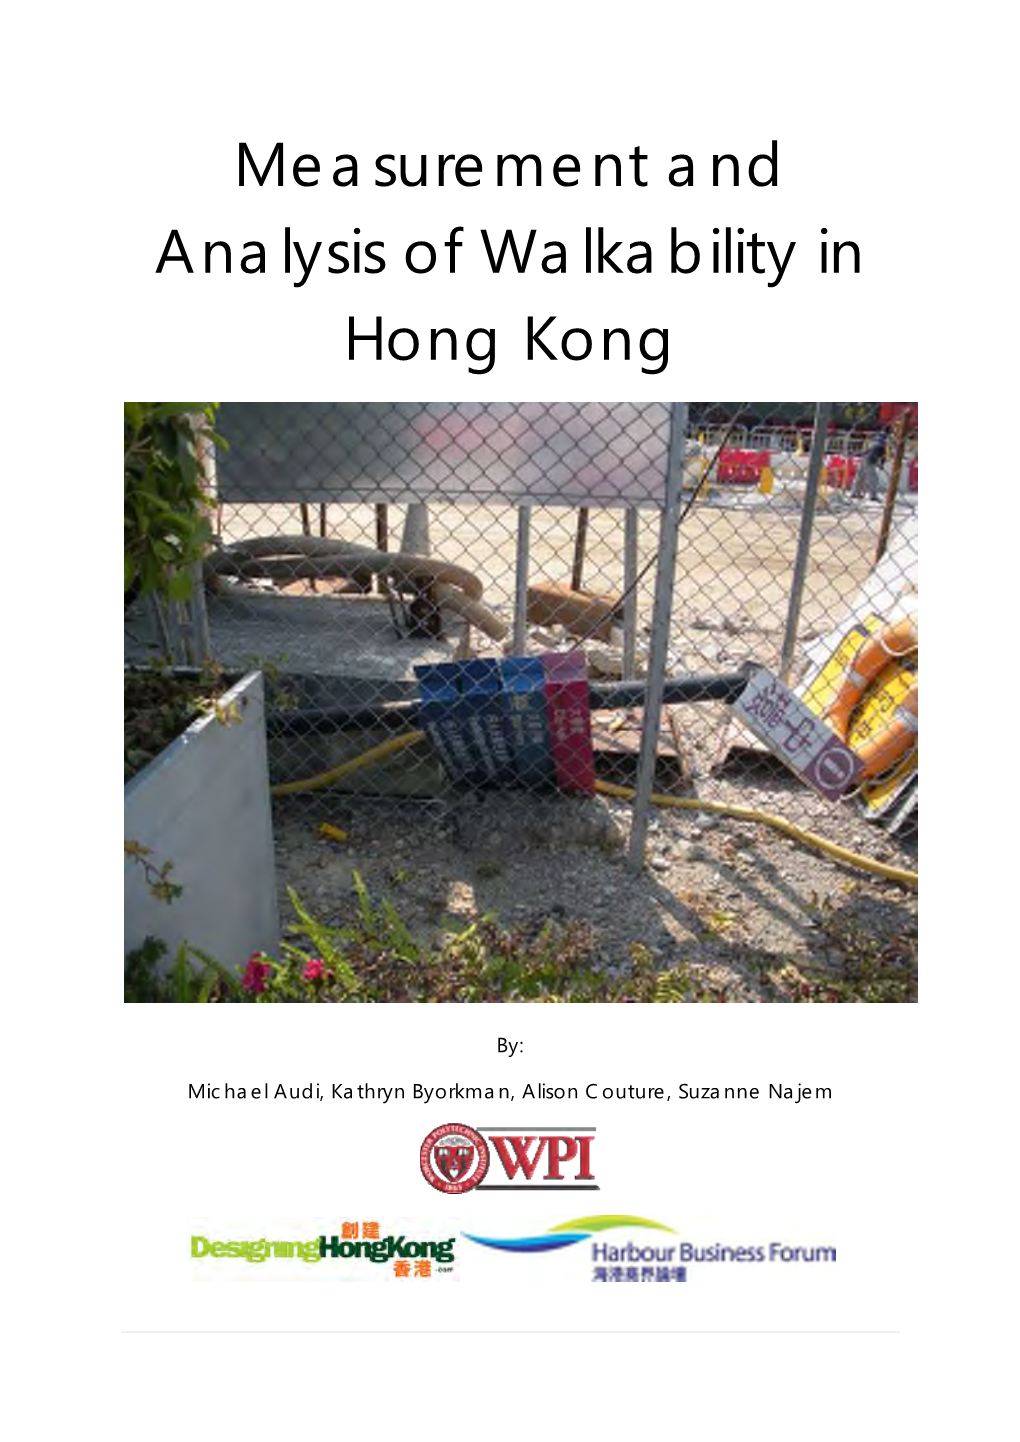 Measurement and Analysis of Walkability in Hong Kong